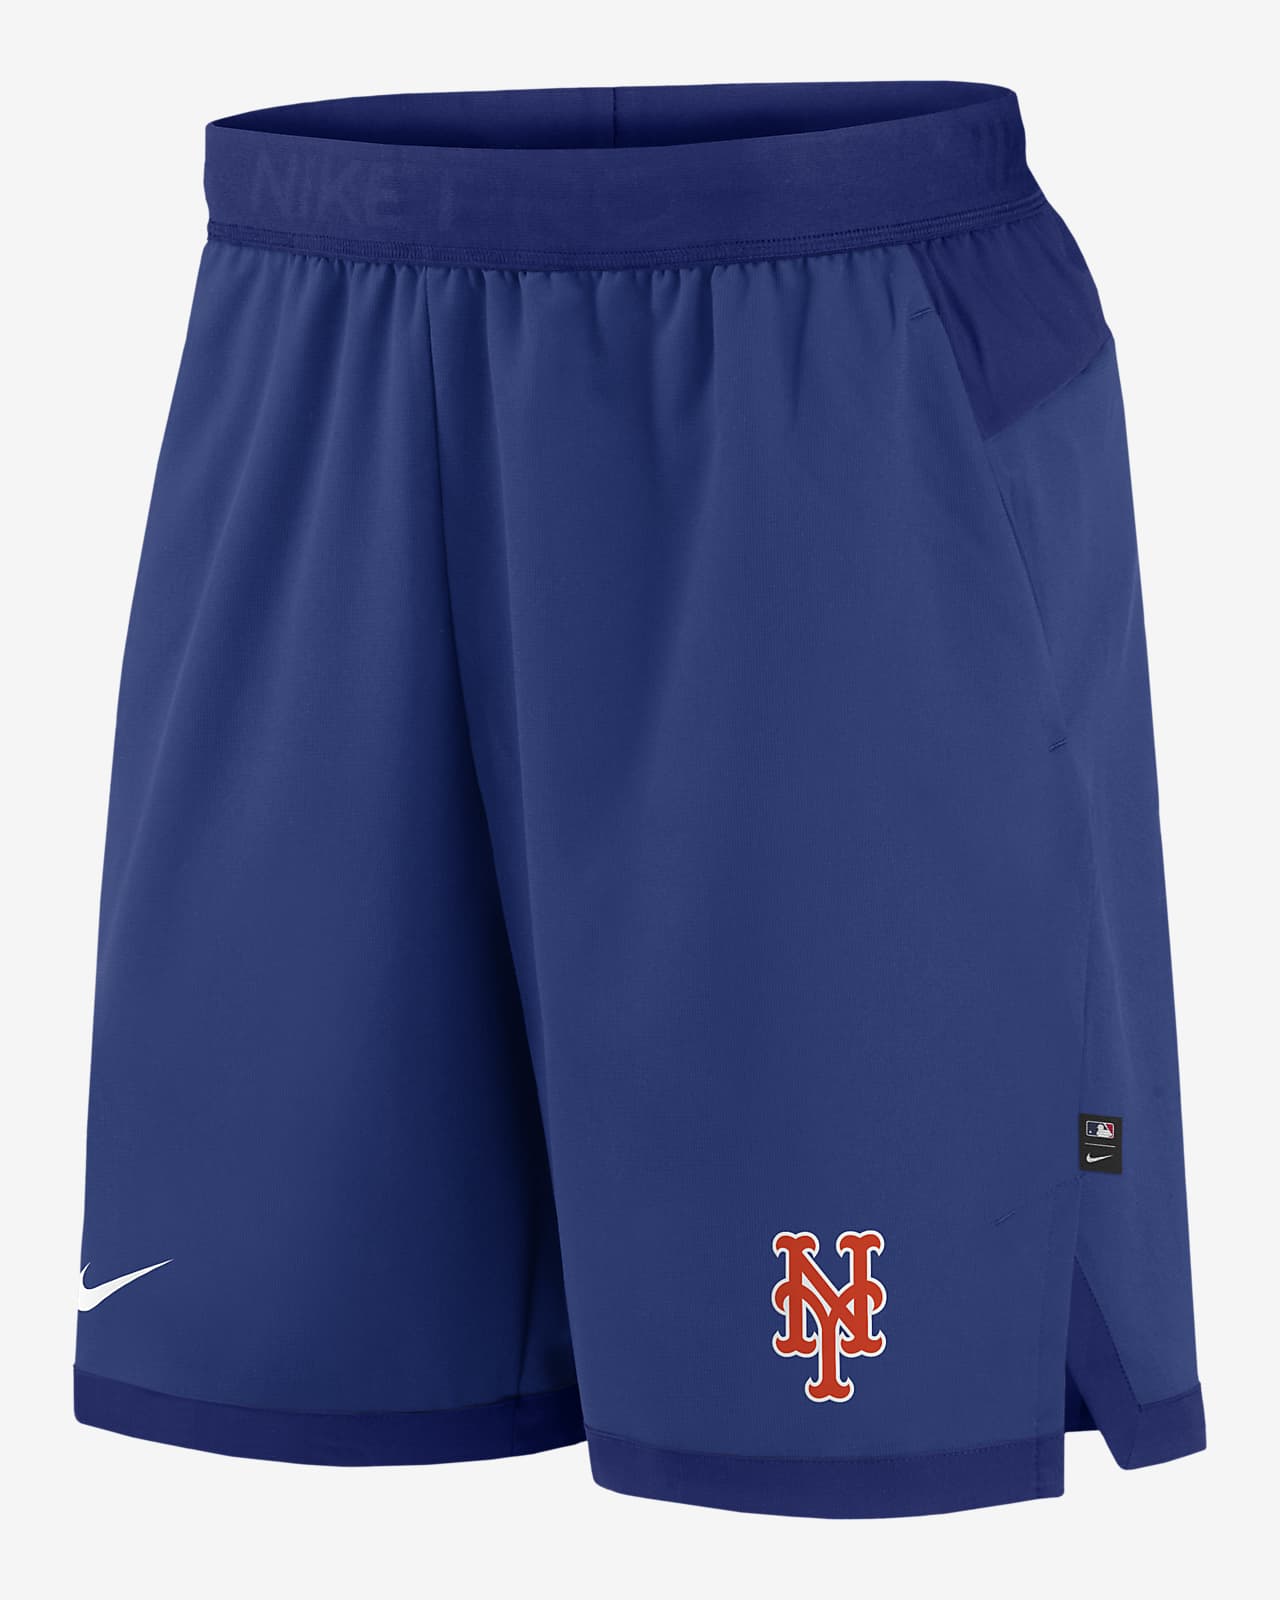 Nike Dri-FIT Flex (MLB New York Mets) Men's Shorts